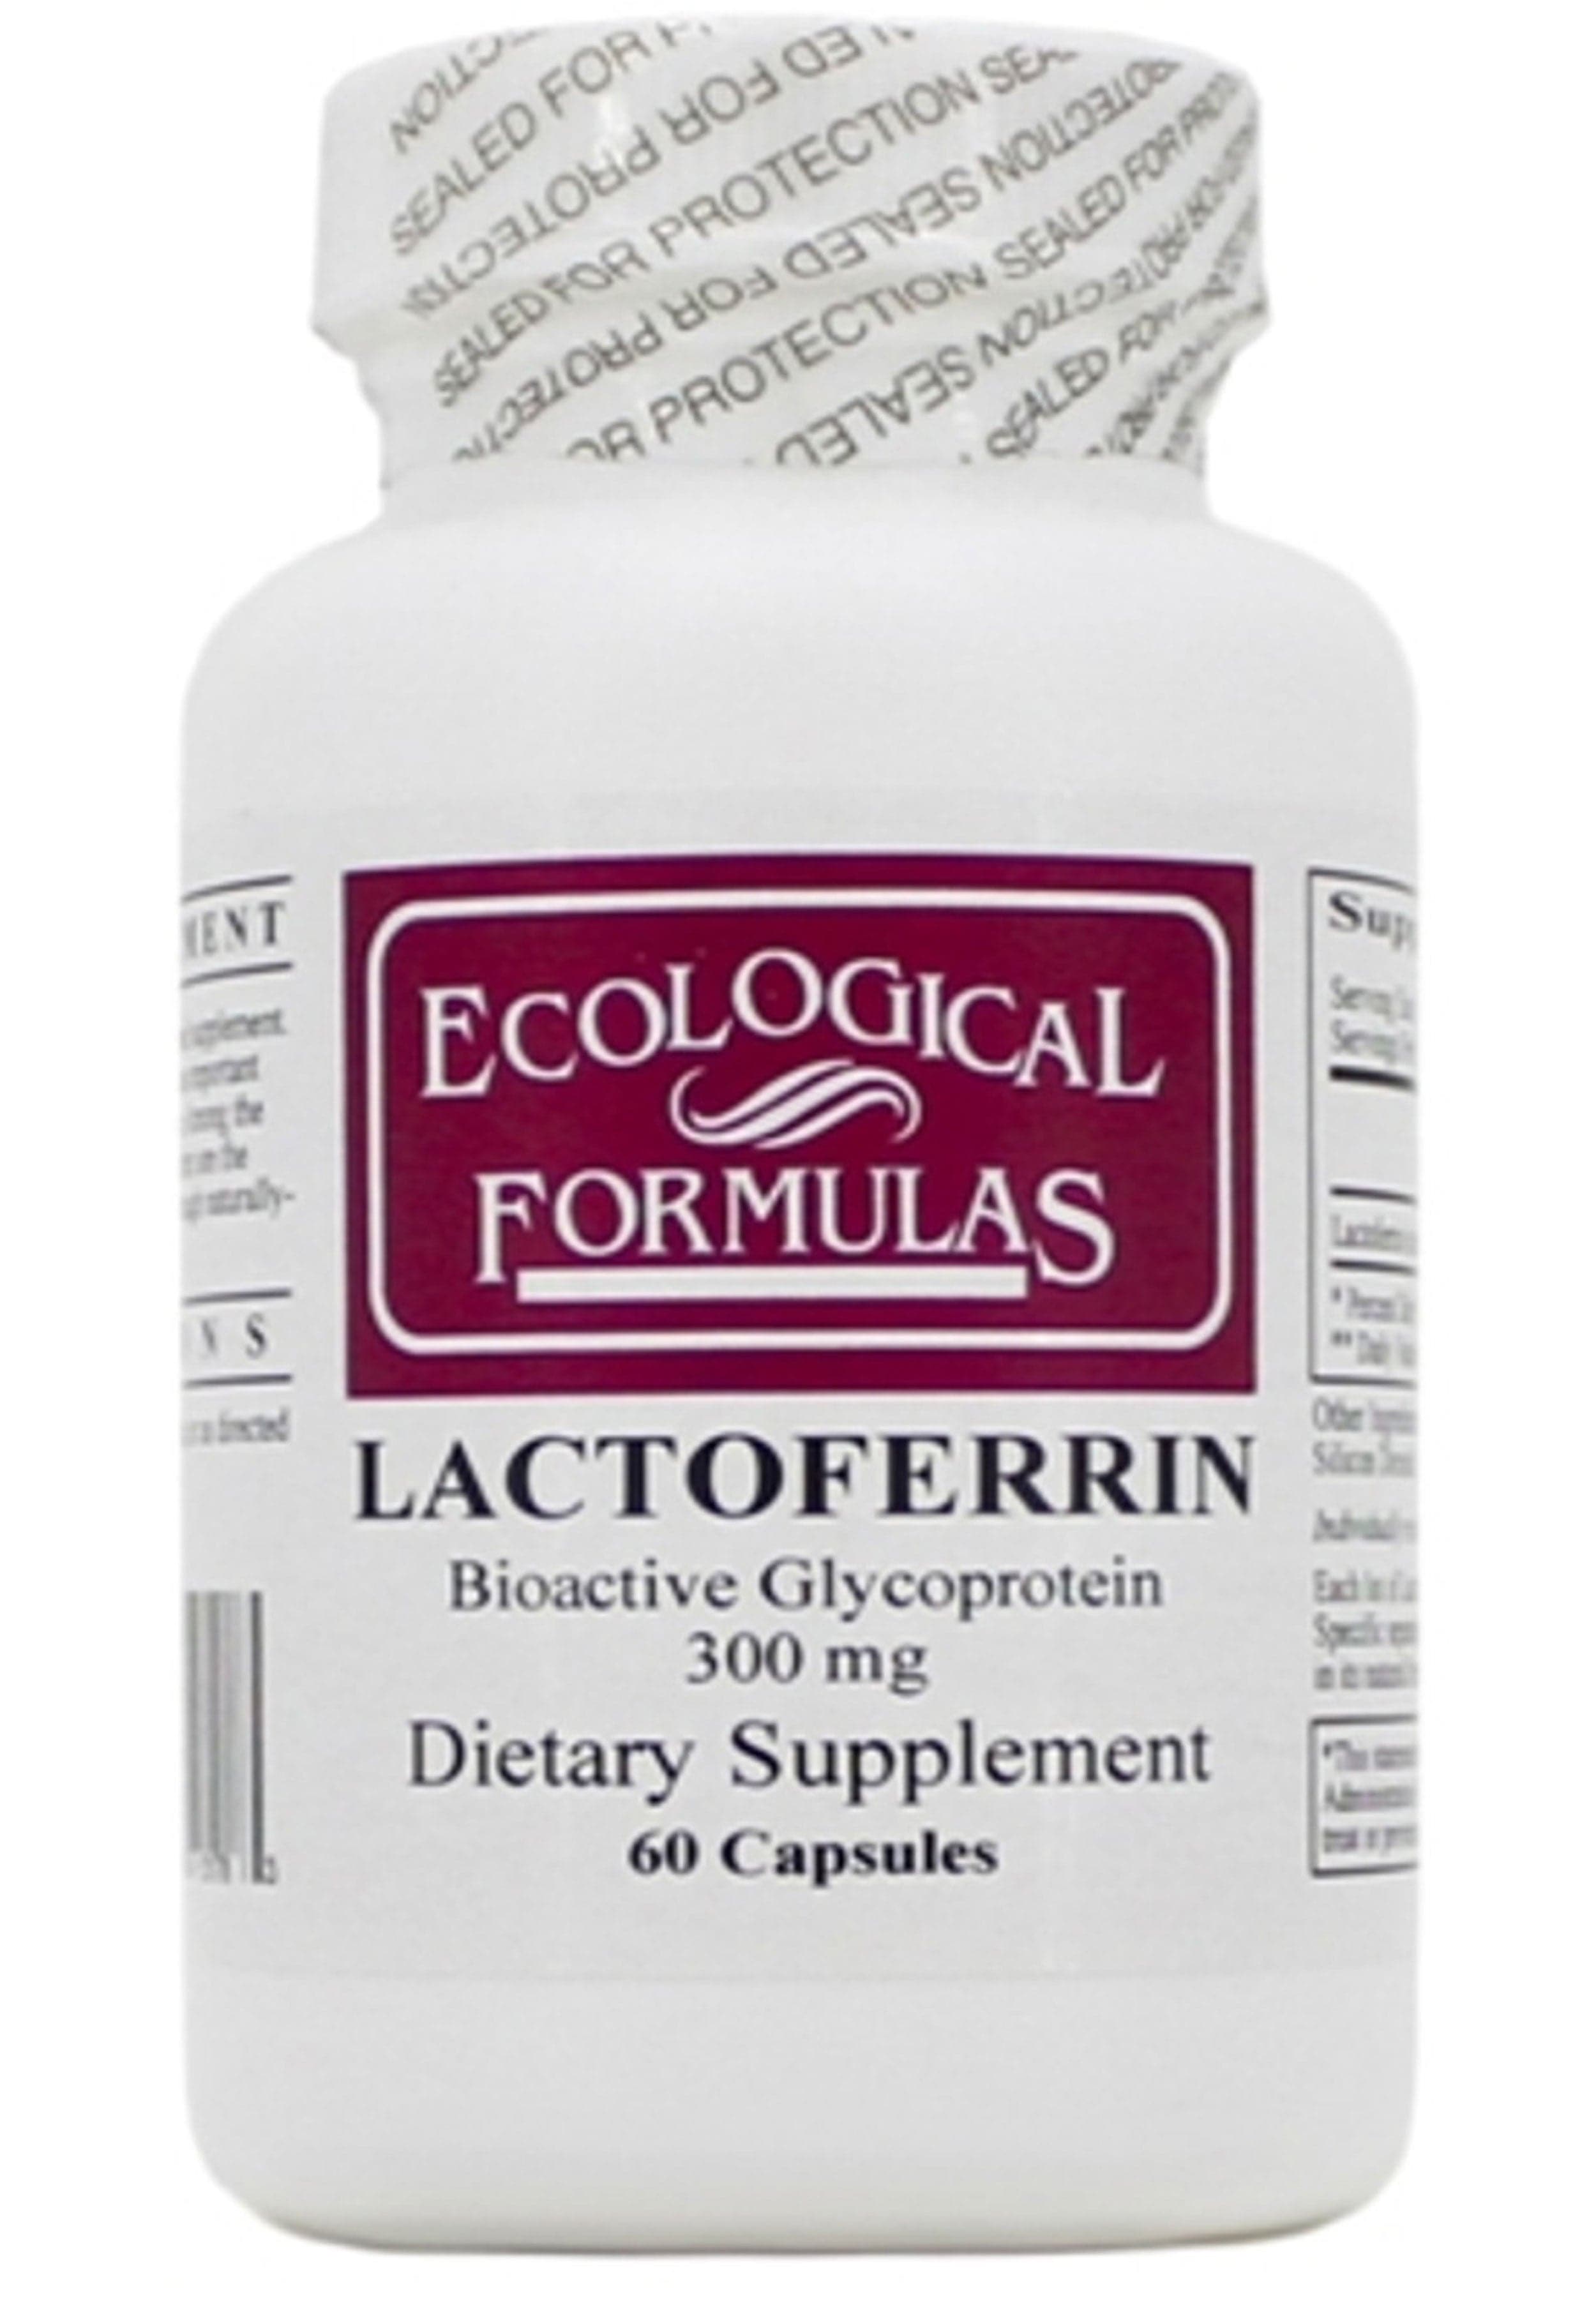 Ecological Formulas/Cardiovascular Research Lactoferrin 300mg